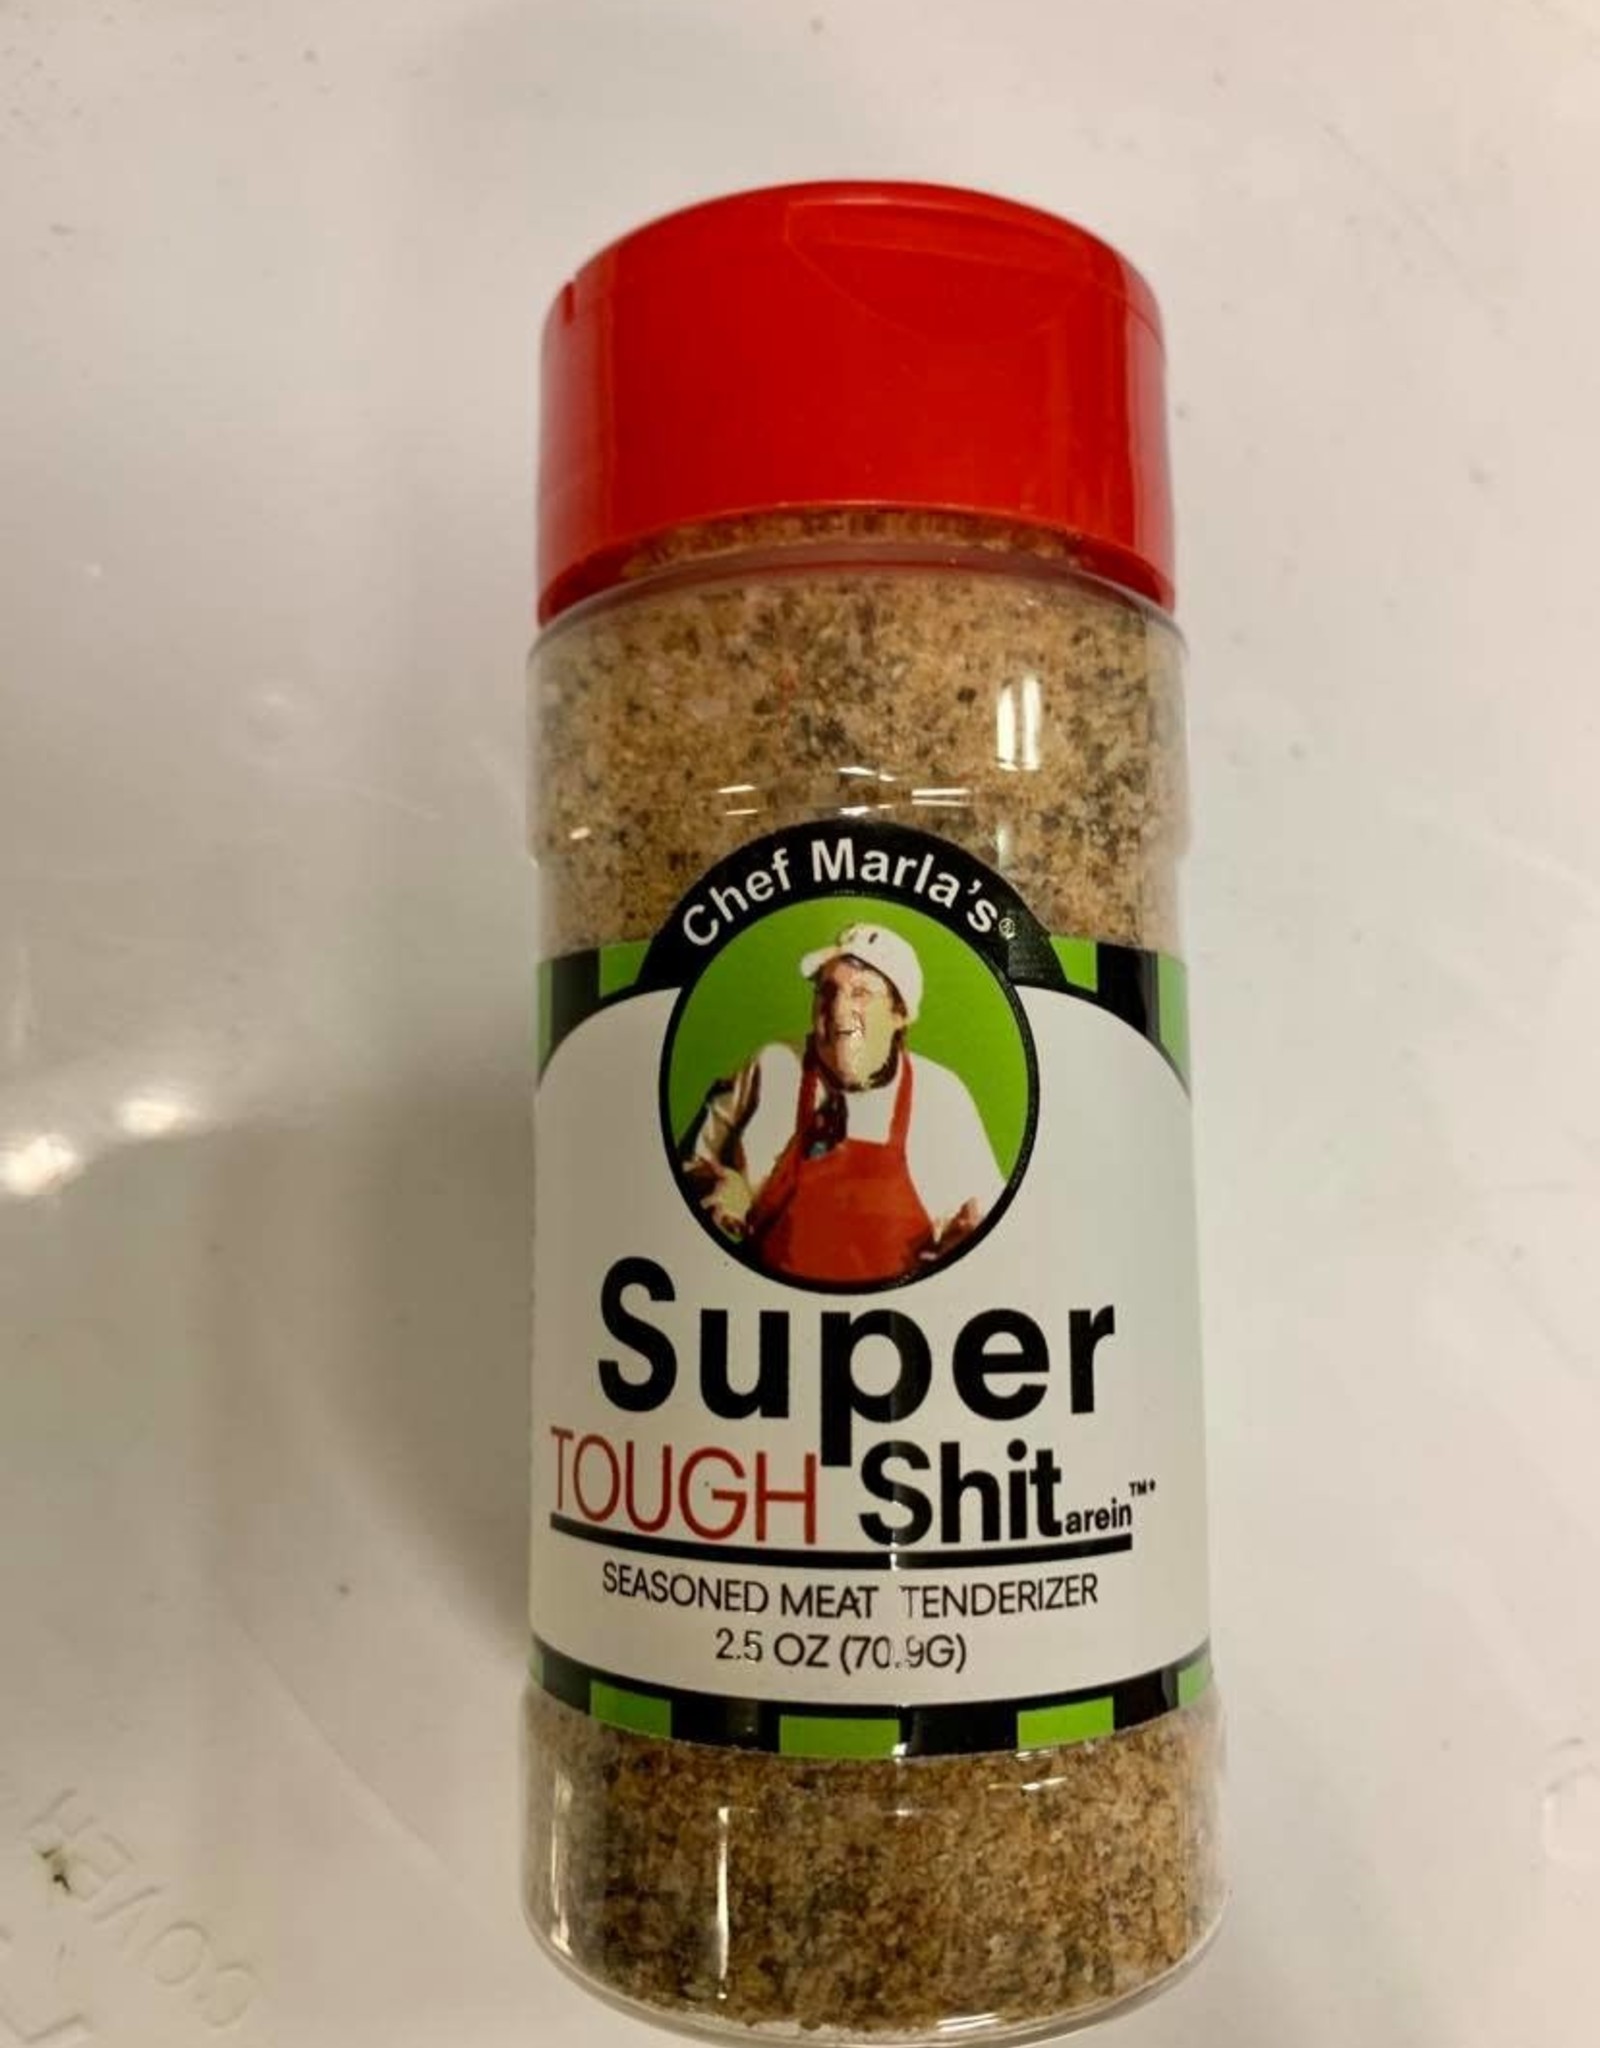 Super Tough Shit arein' Seasoning – Jerky Joint